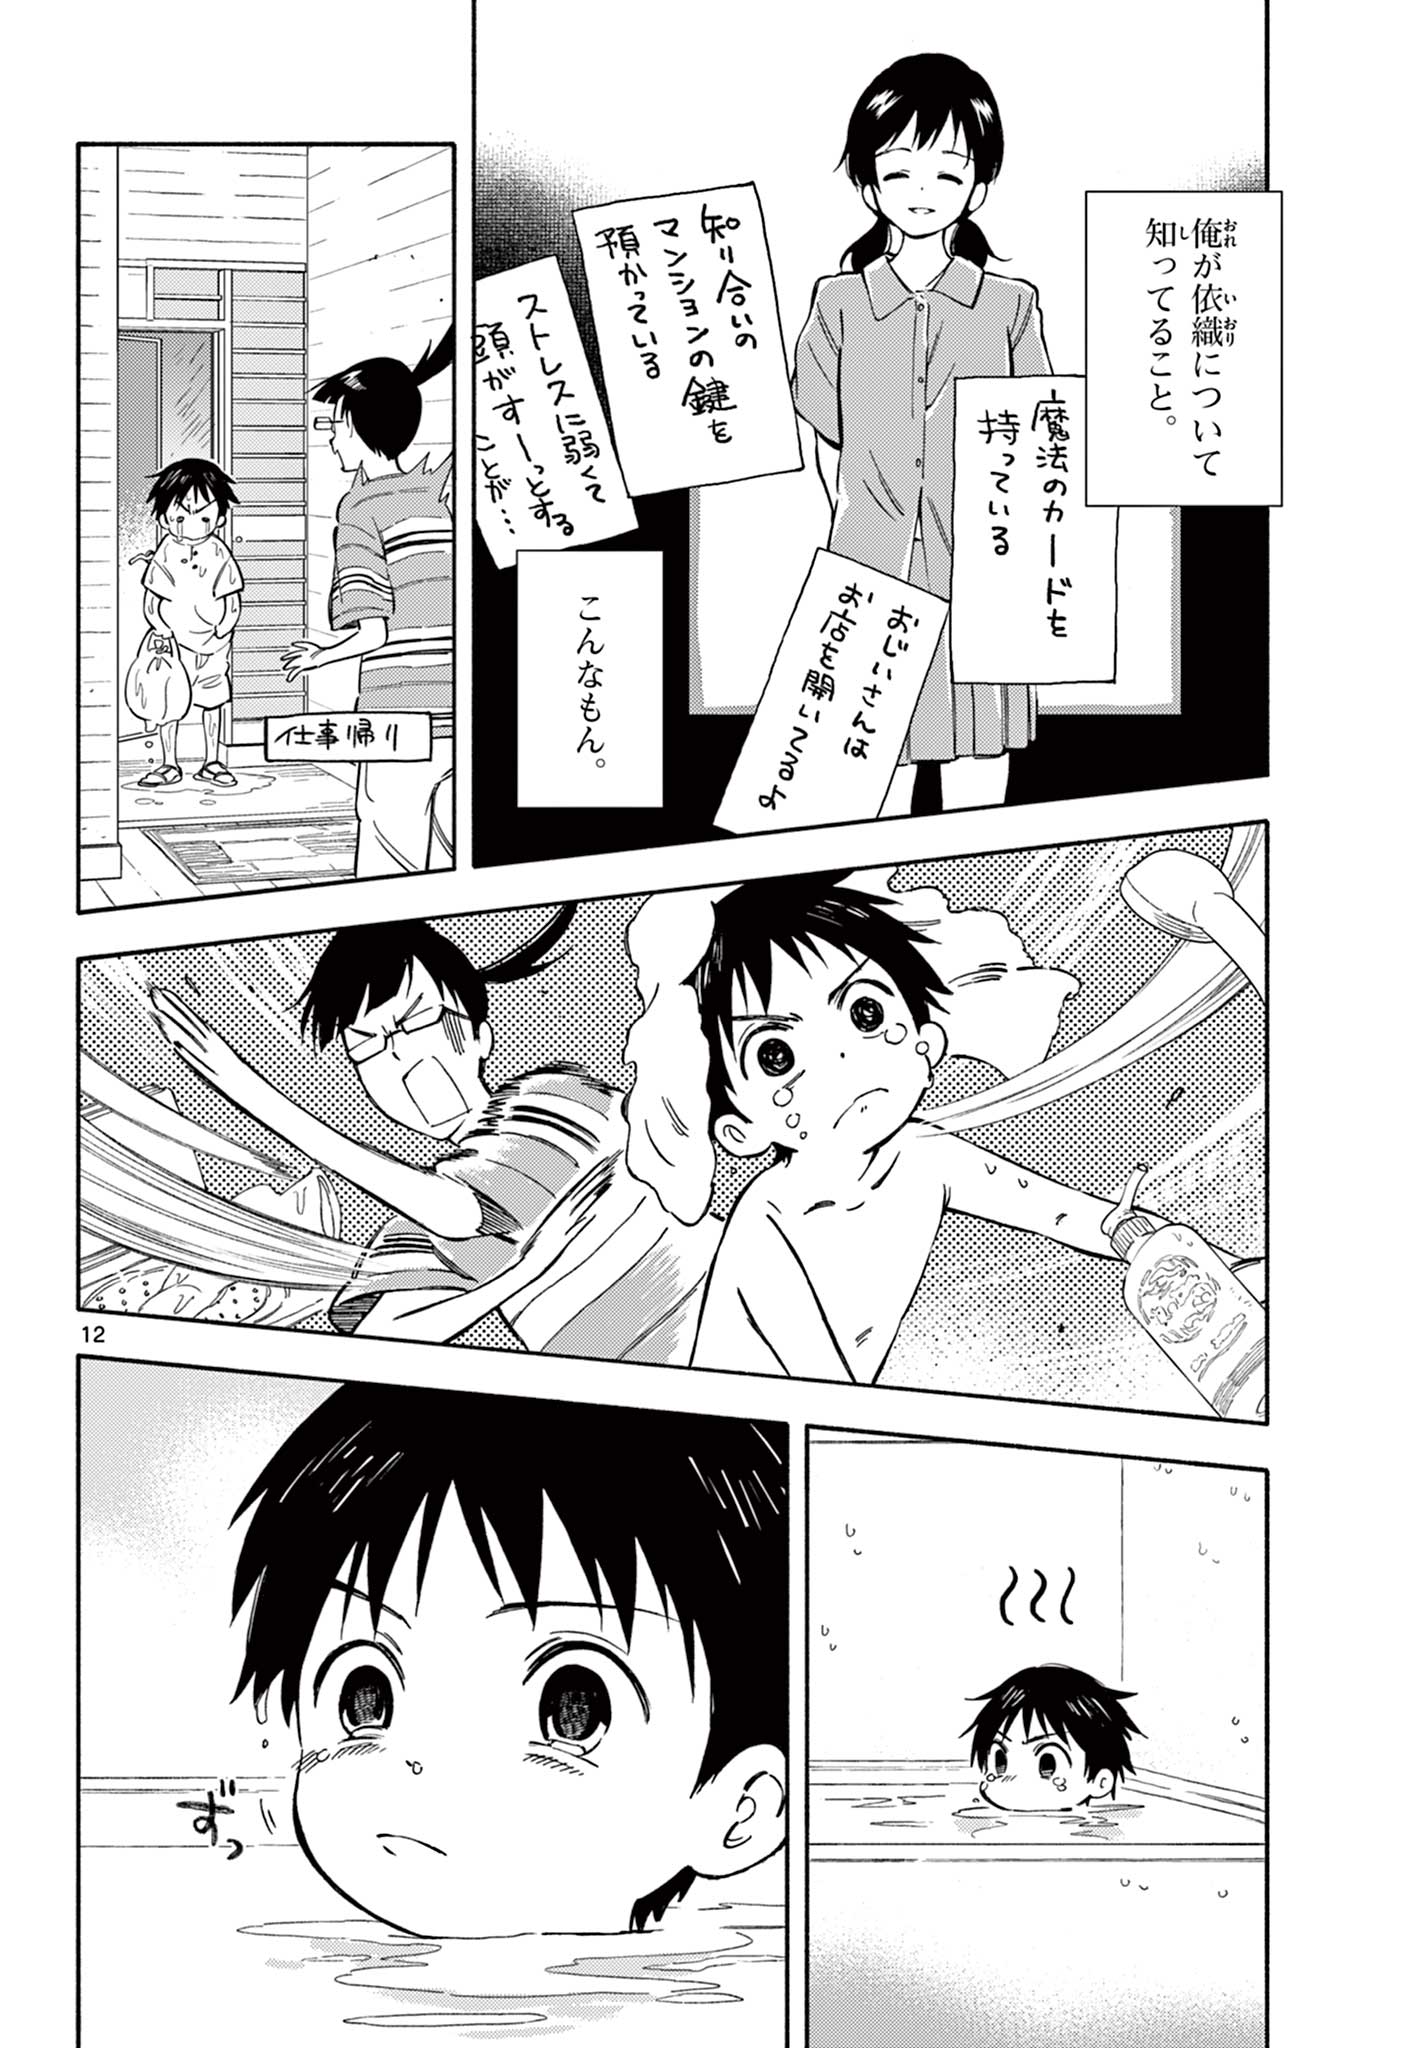 Nami no Shijima no Horizont - Chapter 13.1 - Page 12